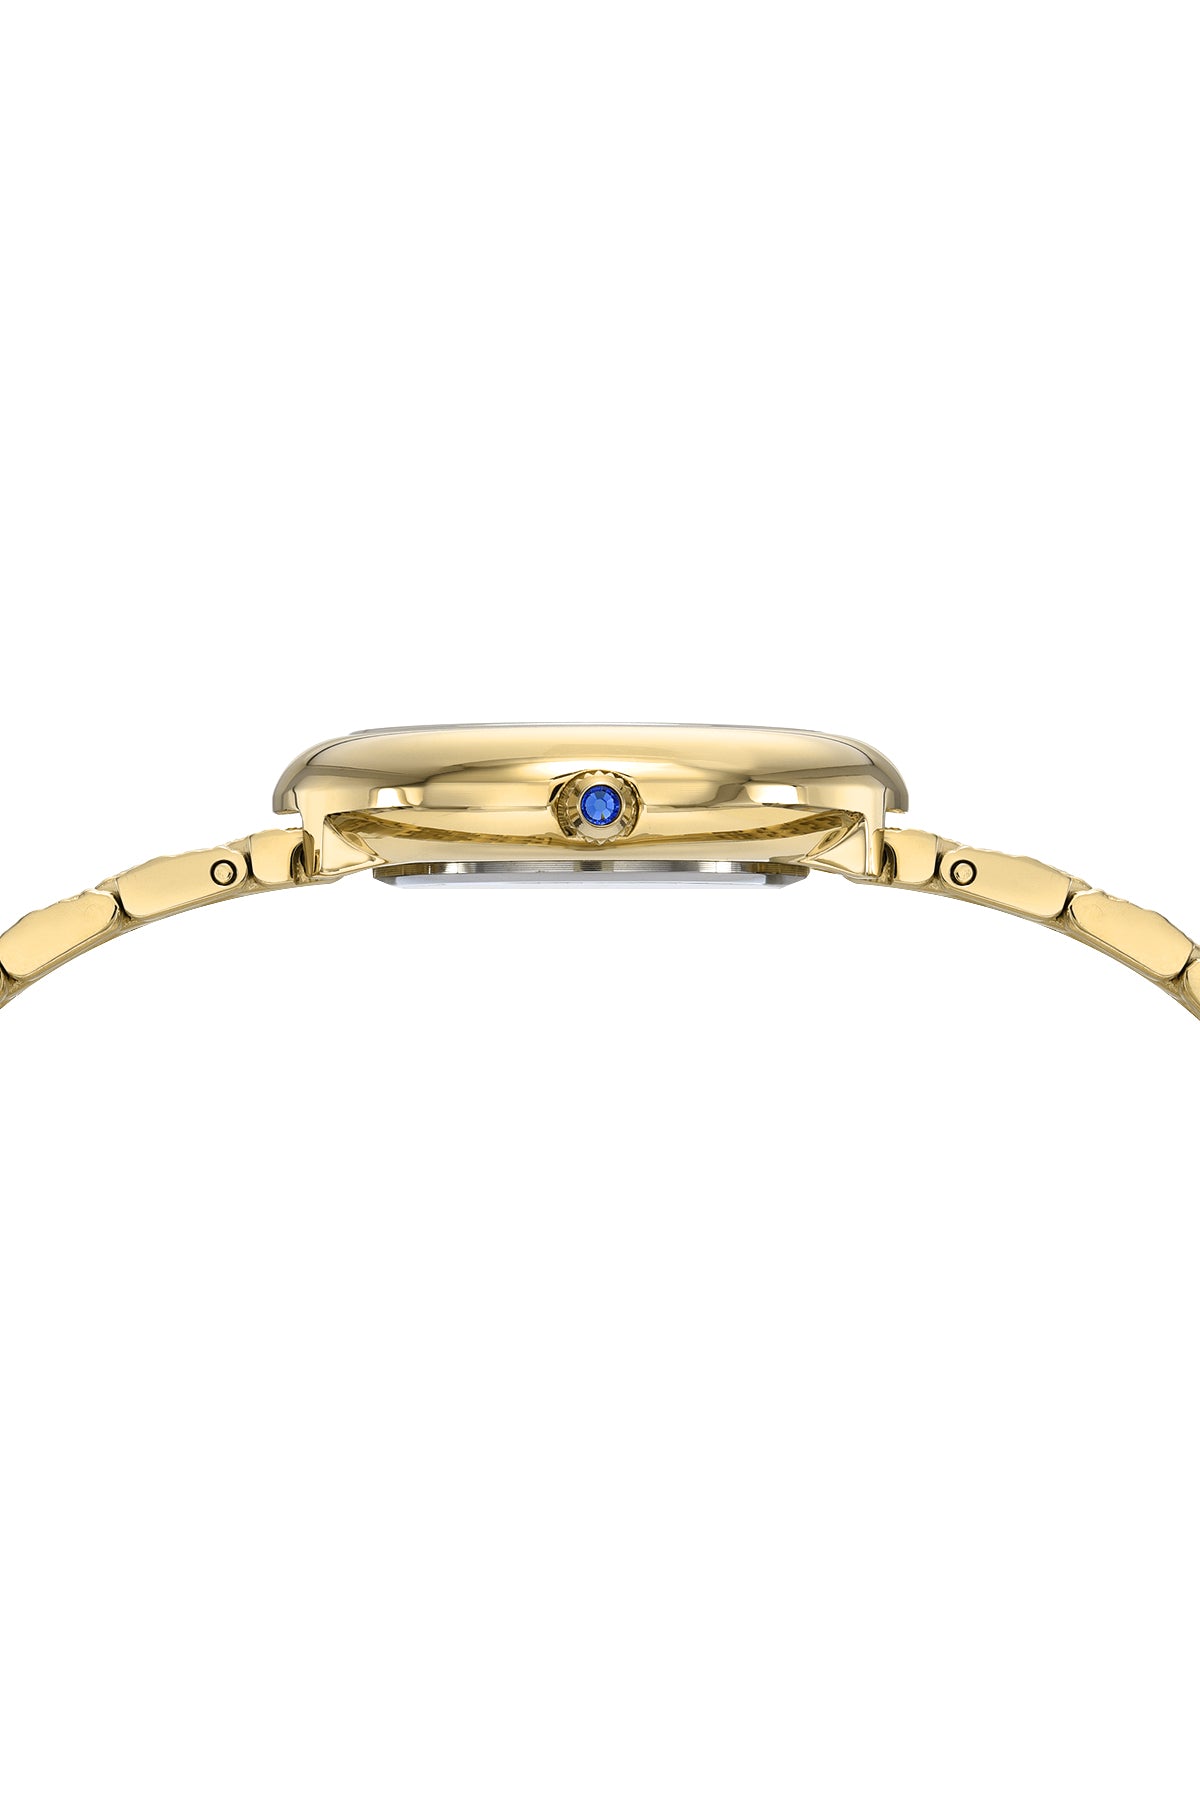 Porsamo Bleu Charlize Luxury Opal Women's Stainless Steel Watch, Gold 1111BCHS